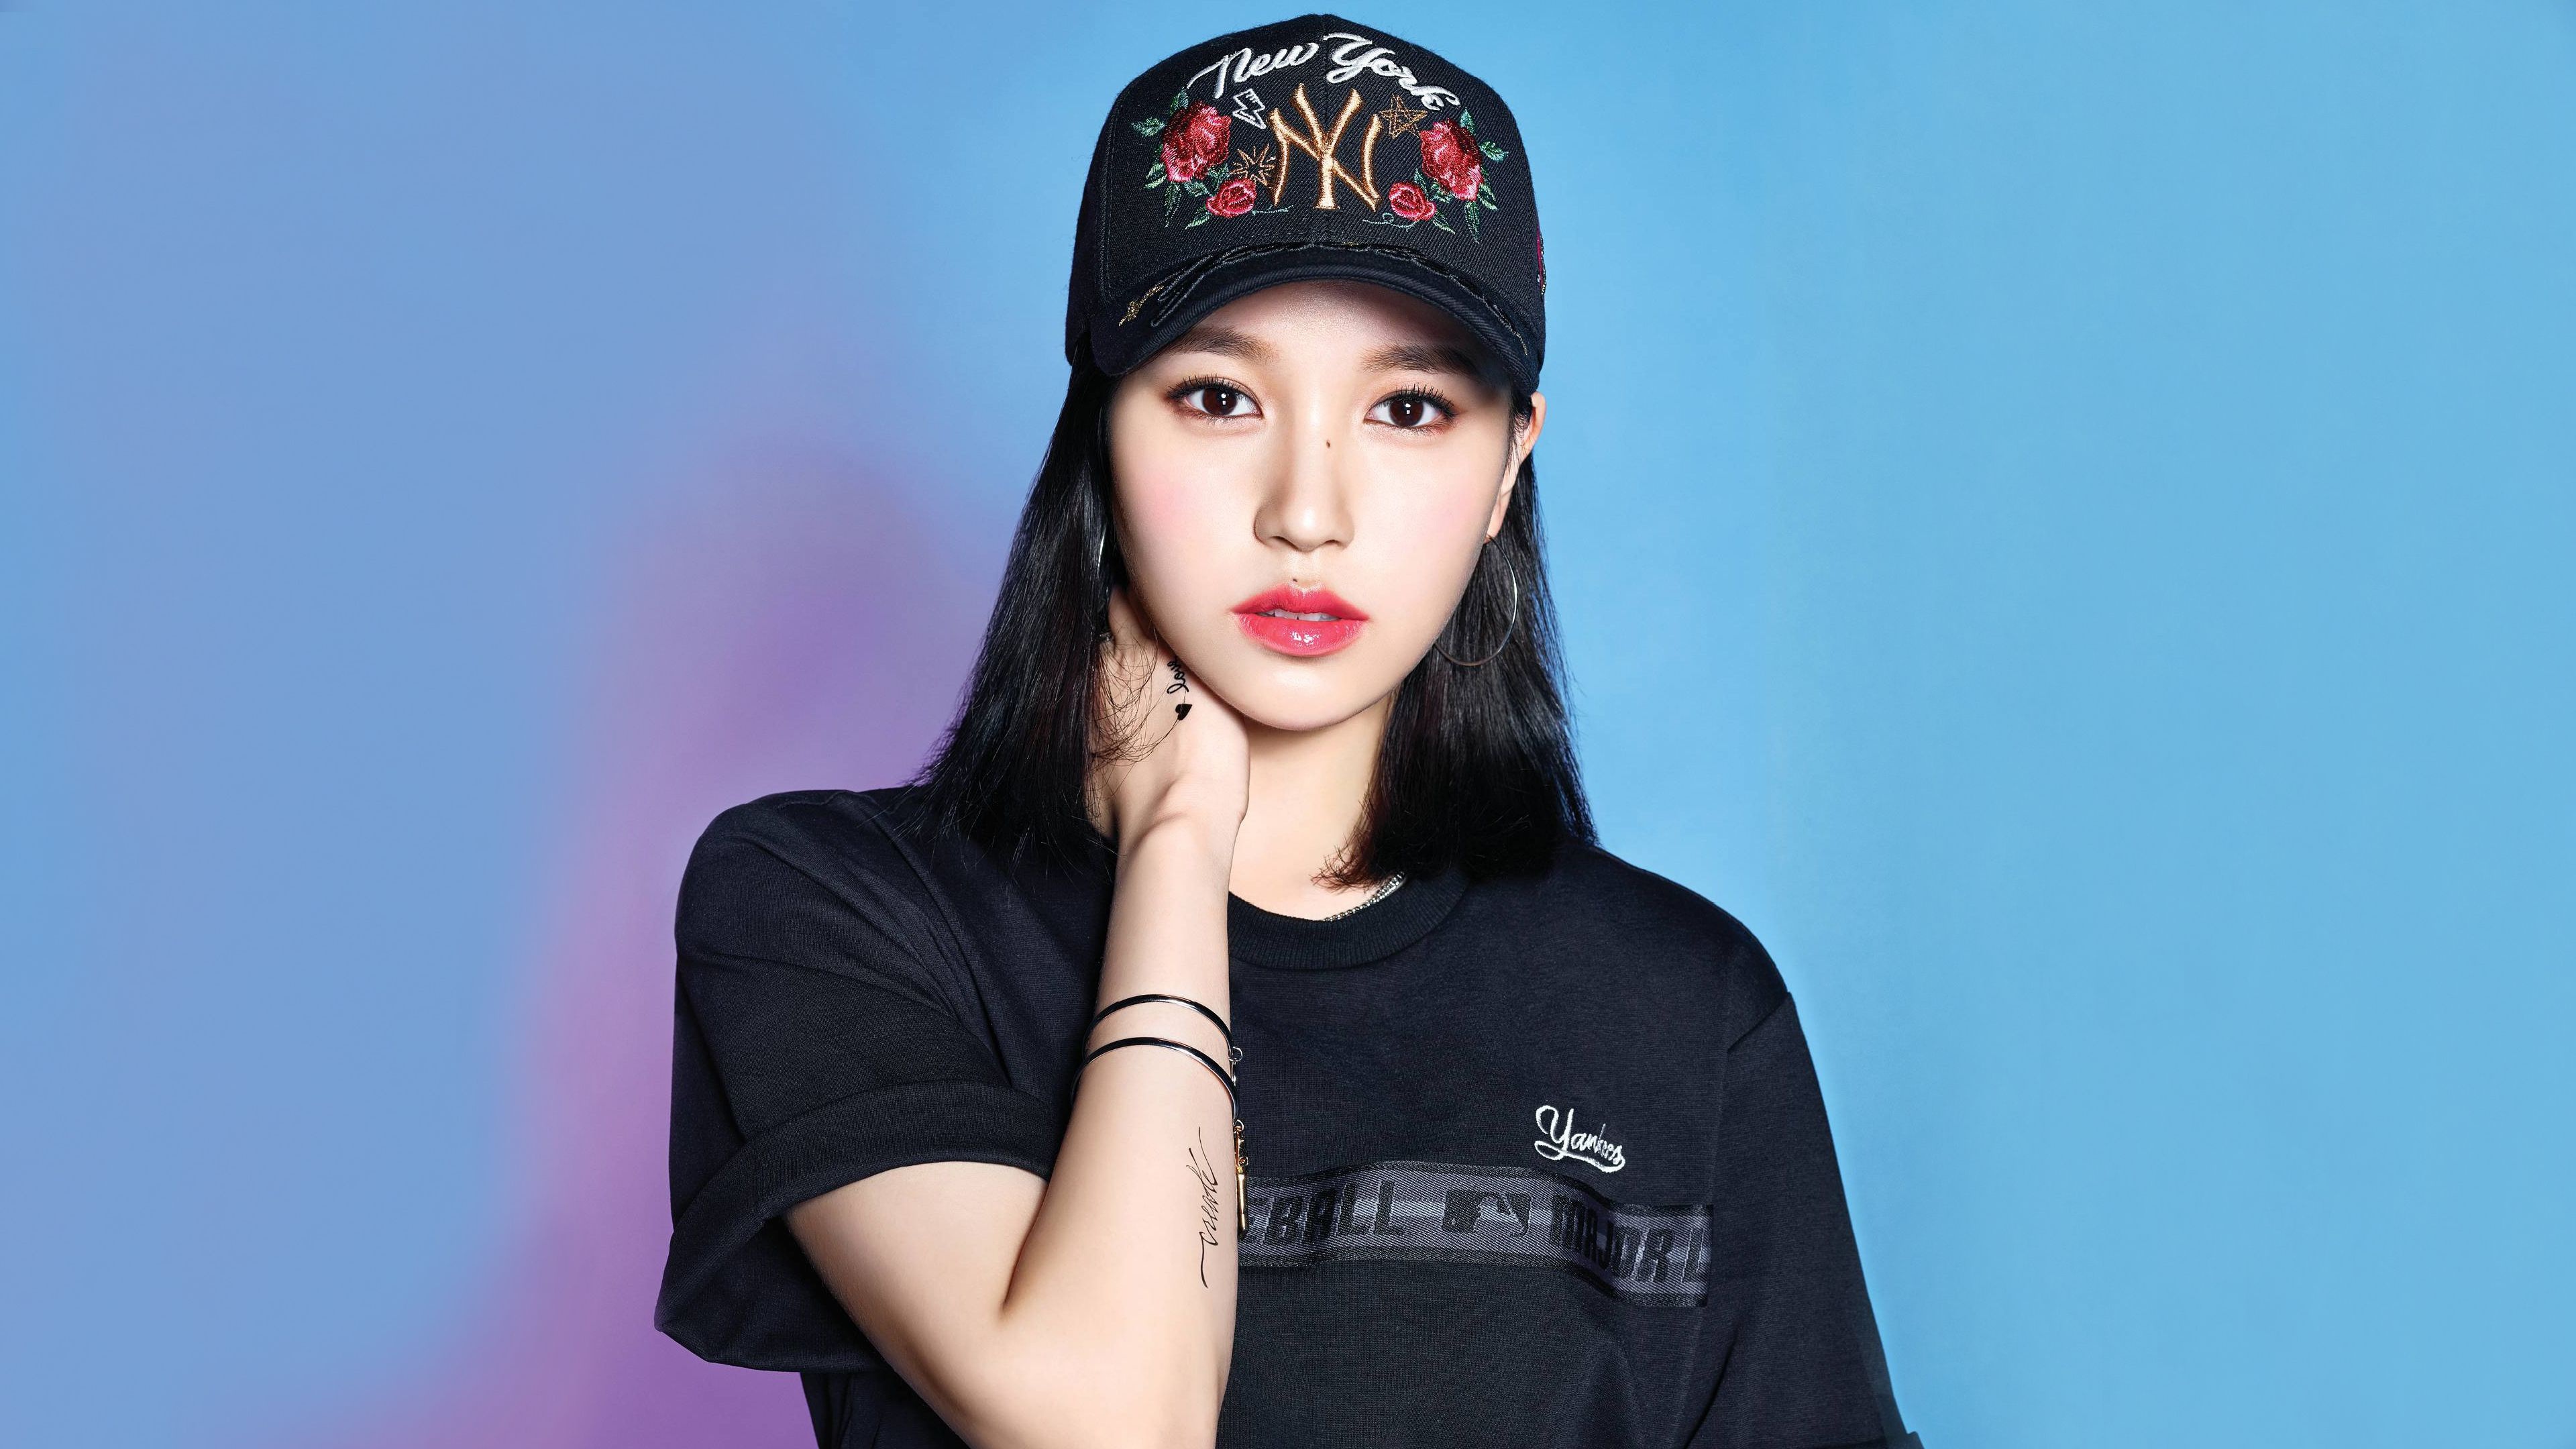 Black Hair Cap Girl K Pop Lipstick Mina Singer Singer Twice Band Woman 3840x2160